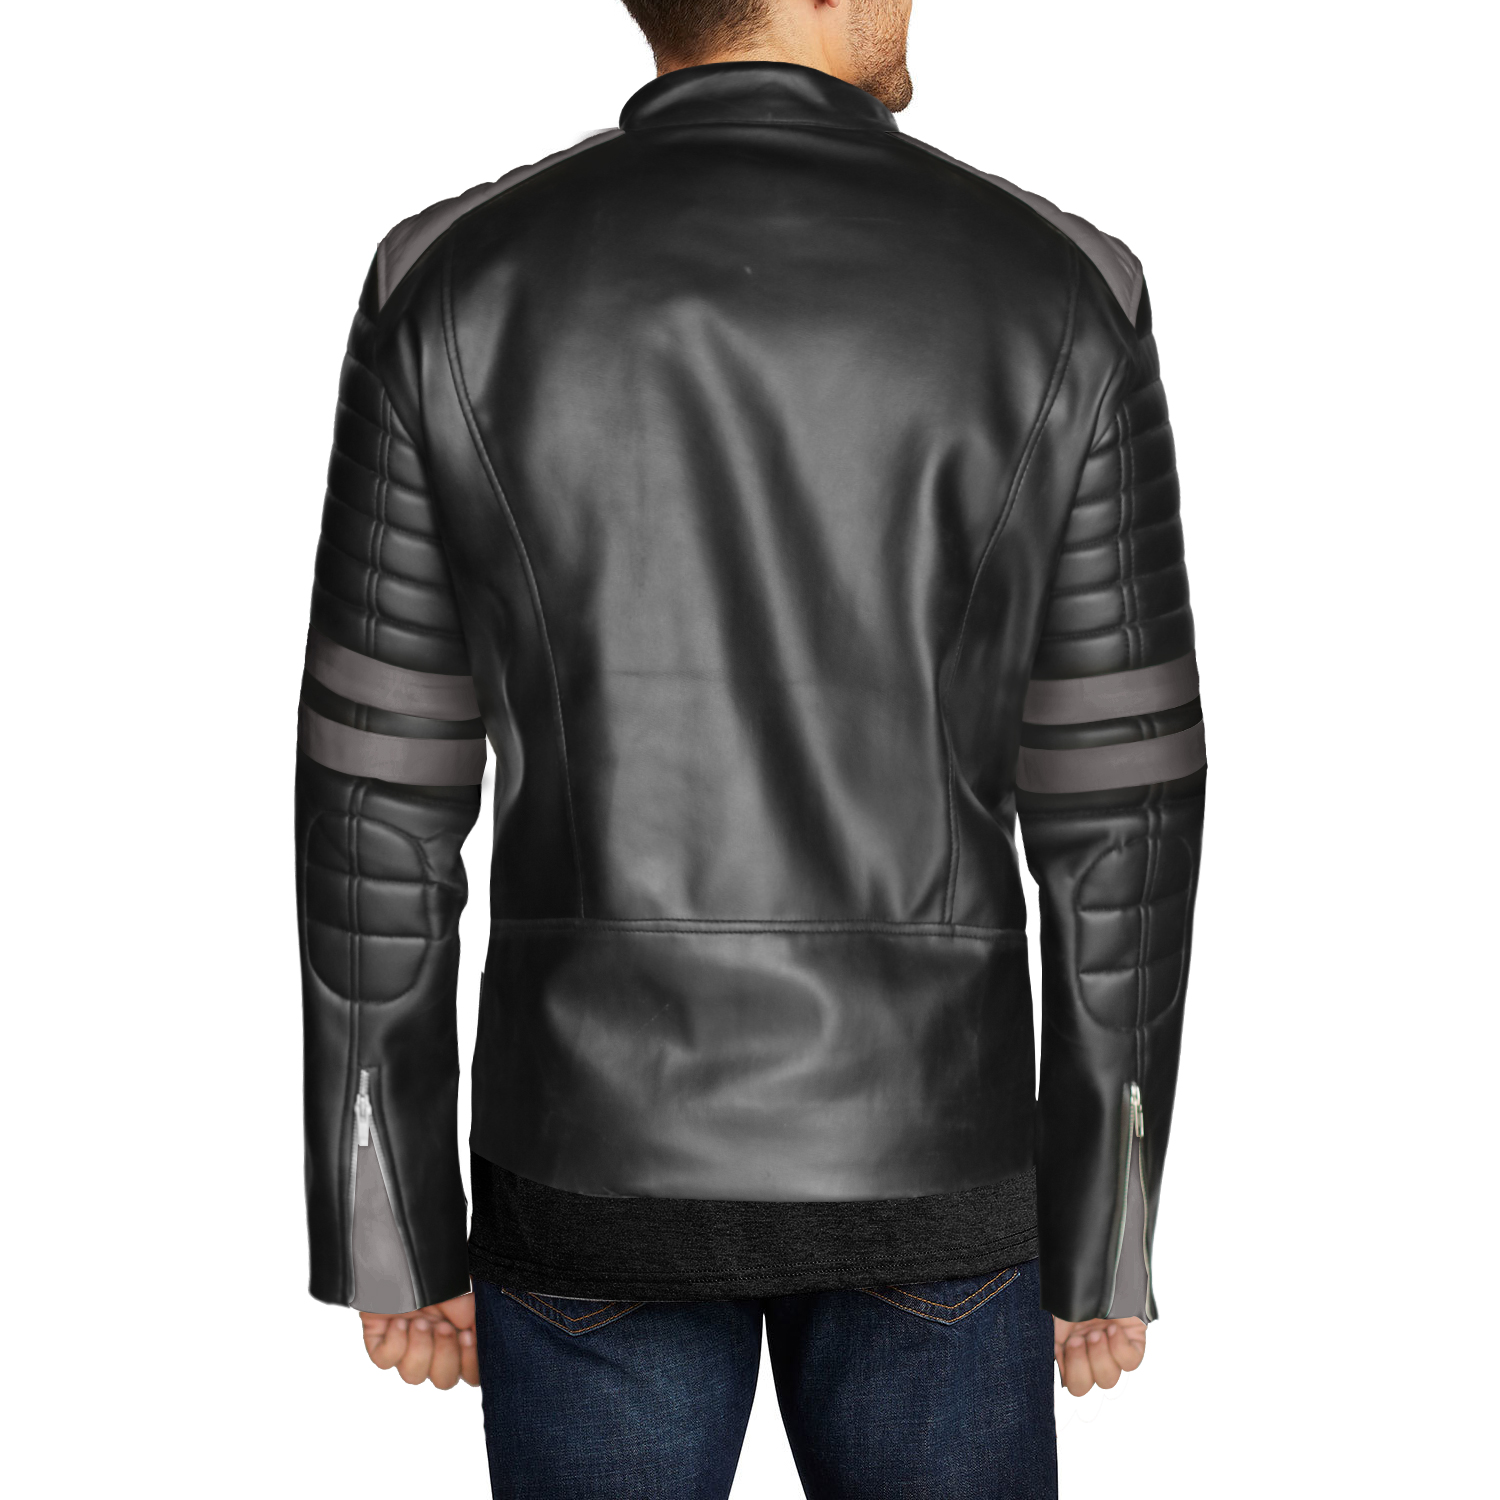 NomiLeather black leather jacket | mens leather jacket and genuine leather jacket men (Black With Grey Strip ) Medium - image 3 of 7